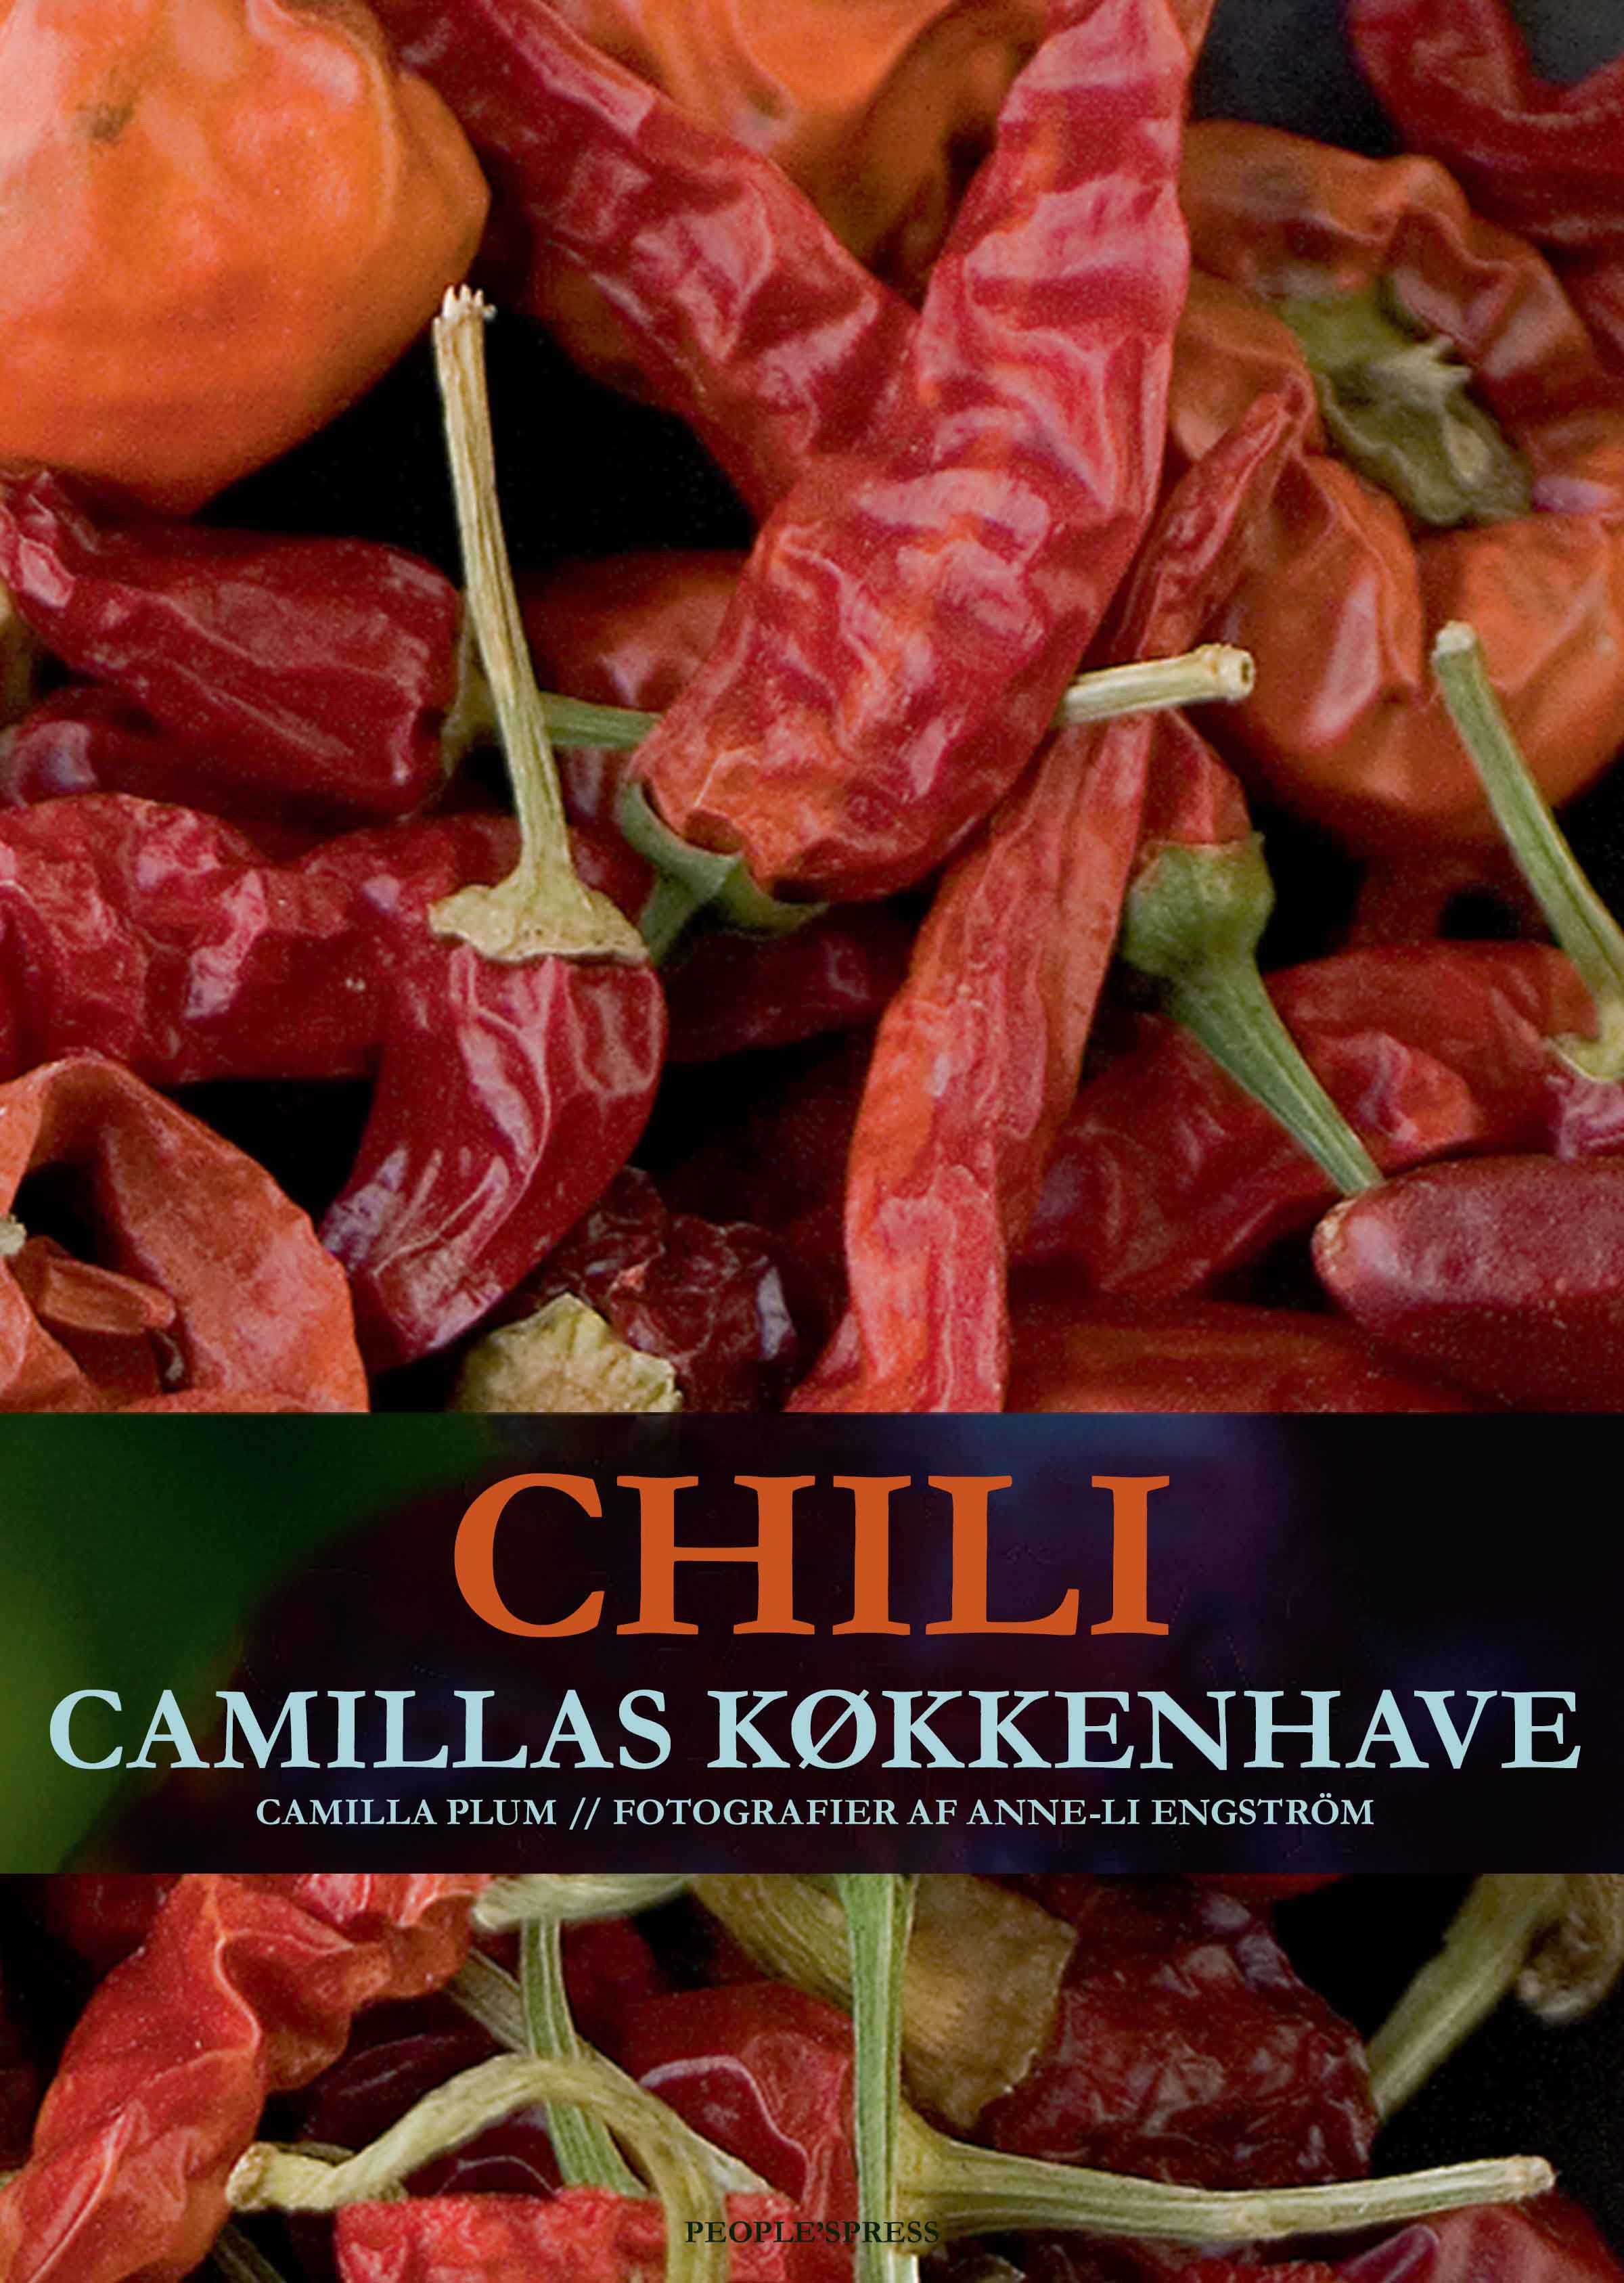 Chili - Camillas køkkenhave, e-bog af Camilla Plum